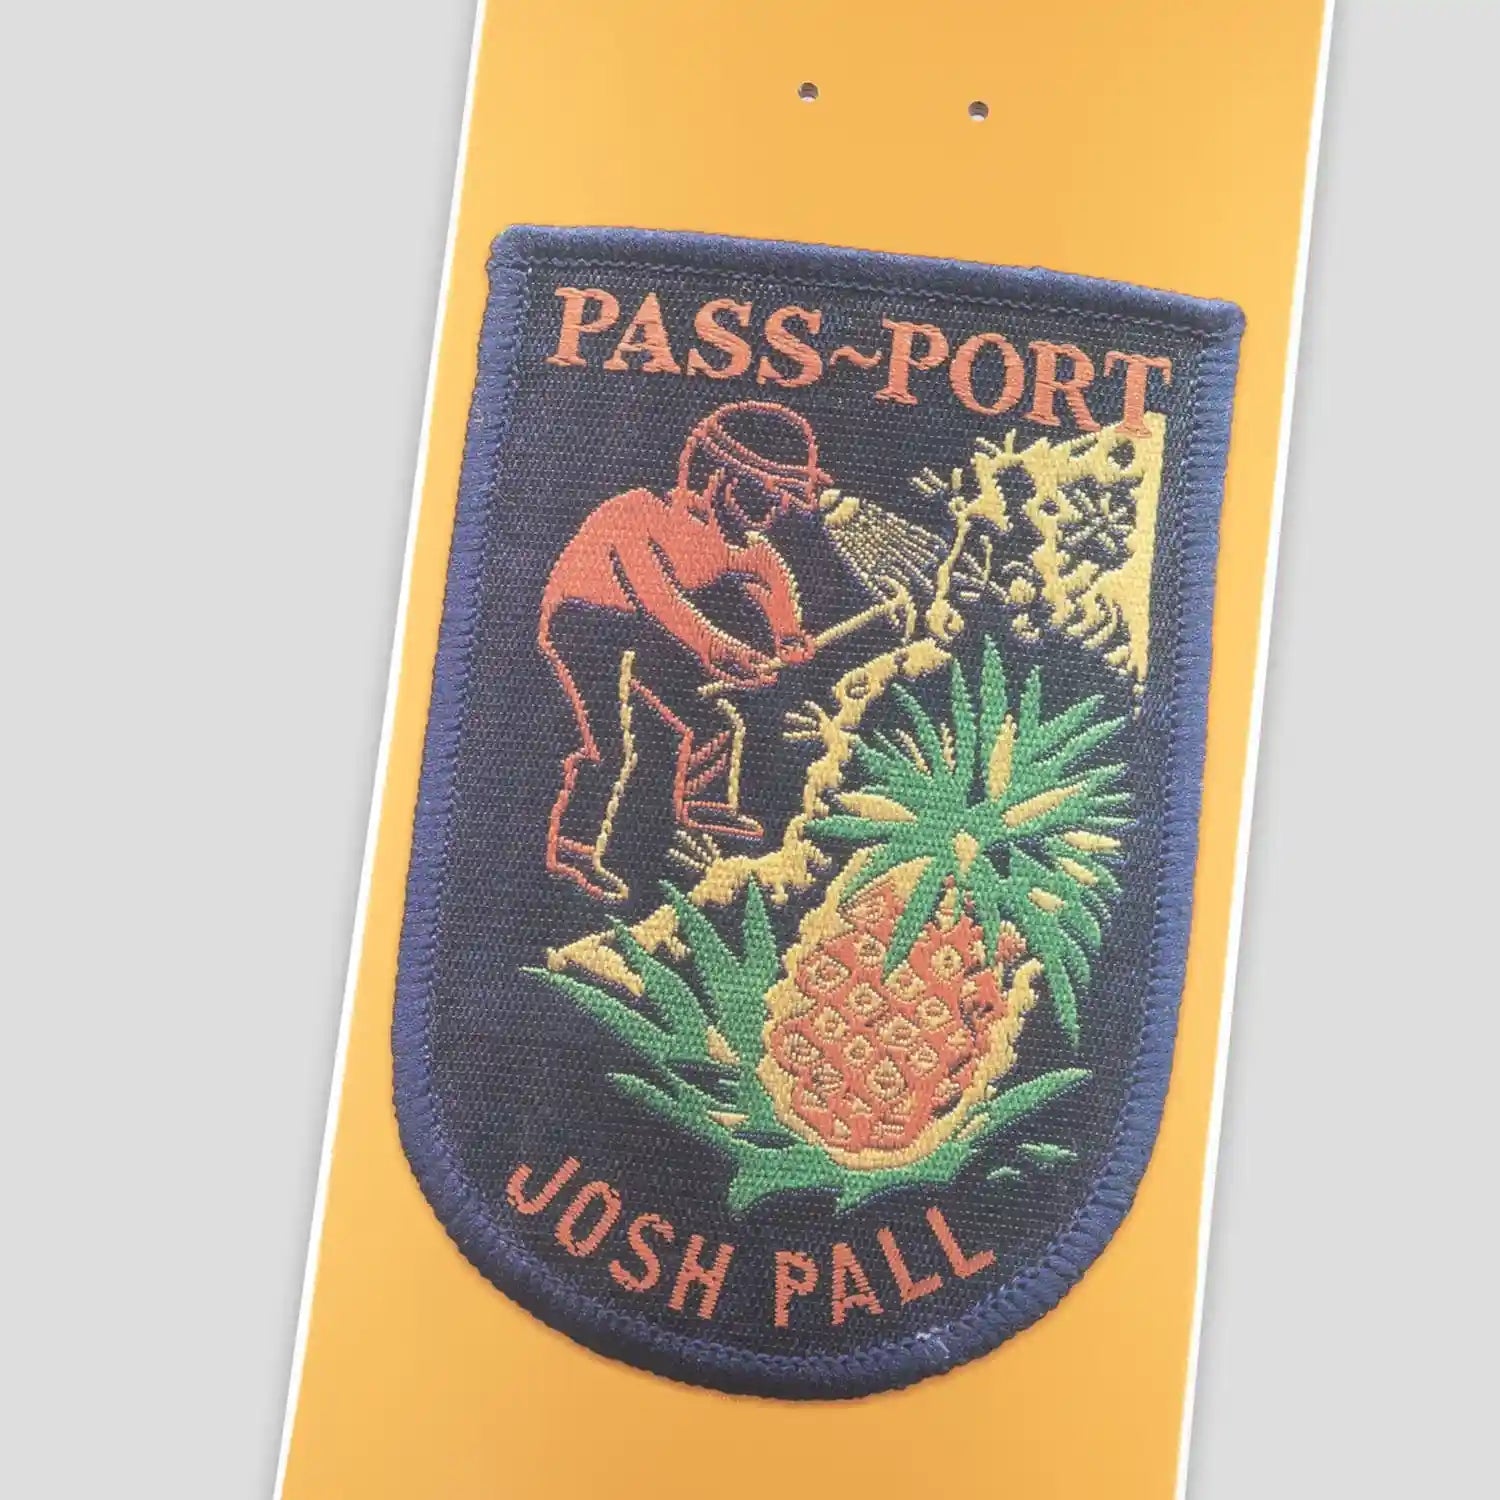 Passport Josh Pall Patch Series Deck (8.38") - Tiki Room Skateboards - 2